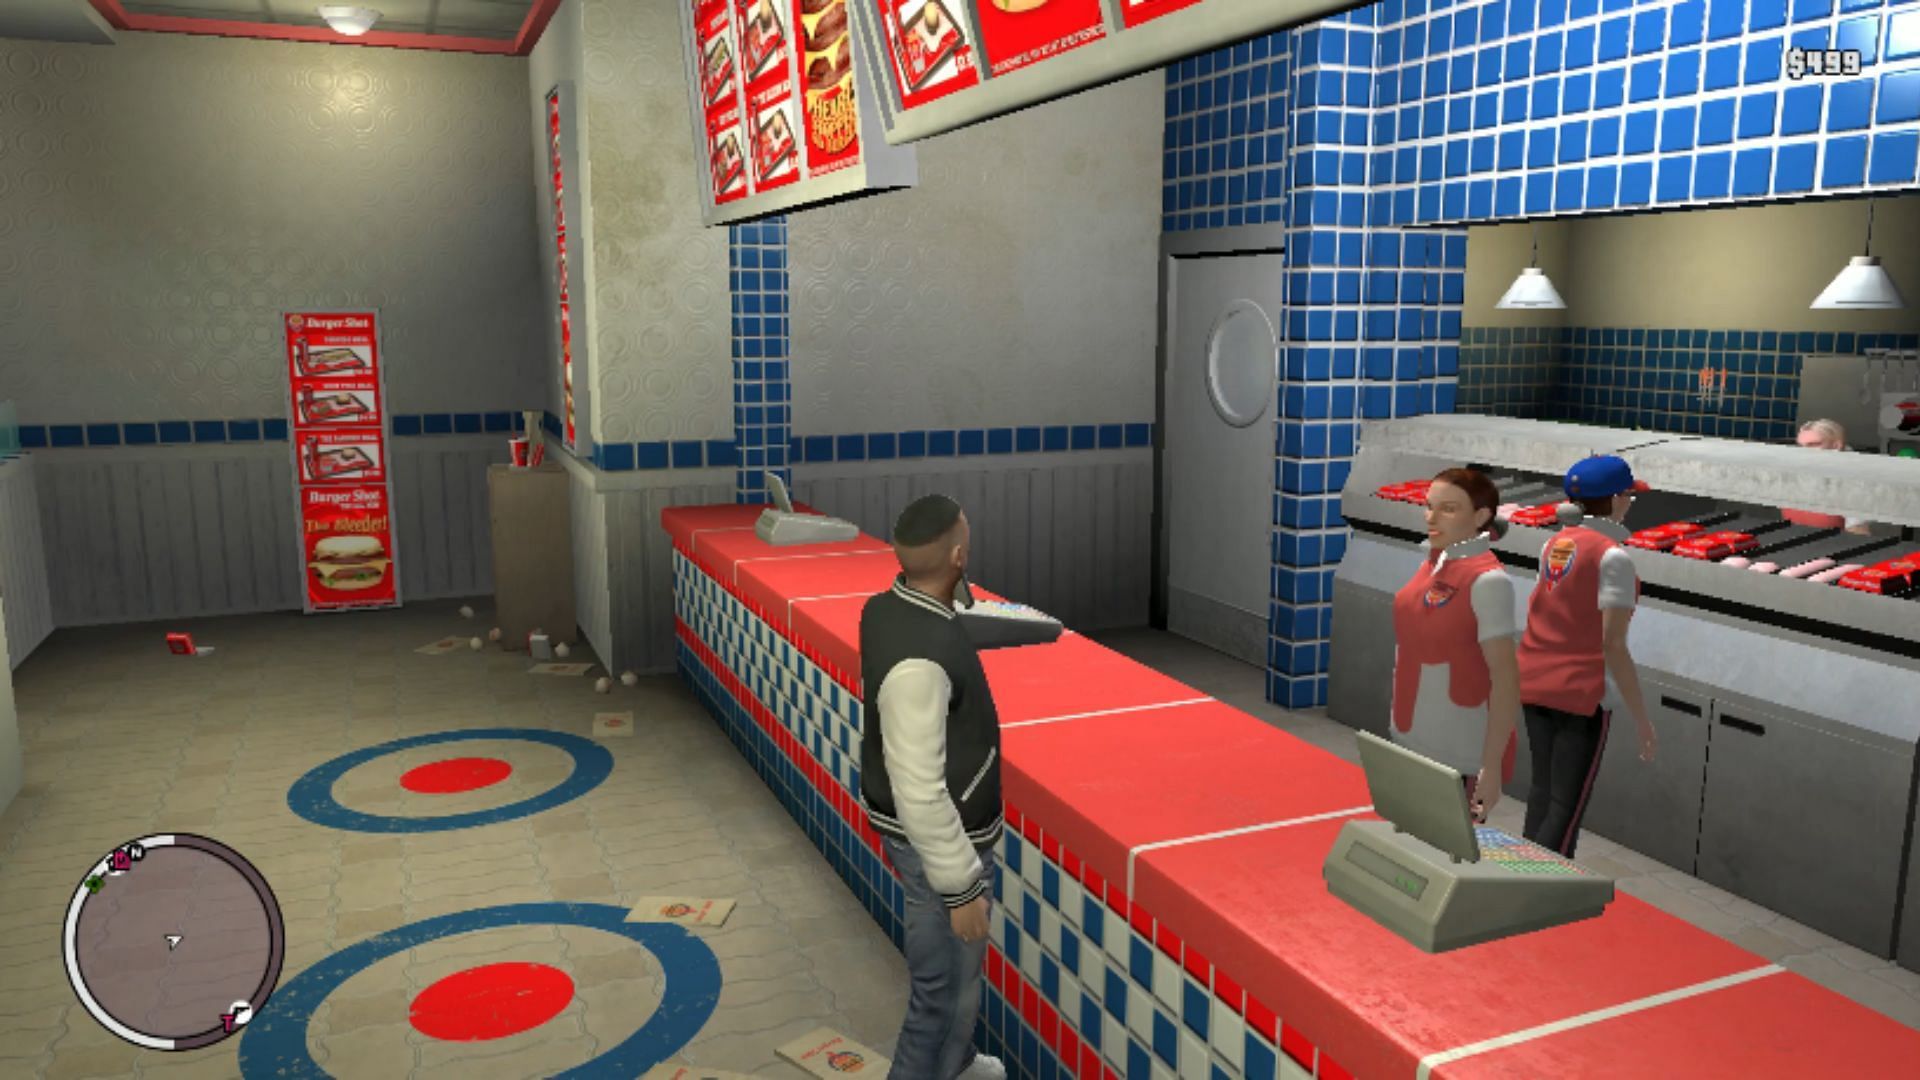 A Burger Shot outlet in GTA 4 The Ballad Of Gay Tony (Image via YouTube/Katzenwagen TV)